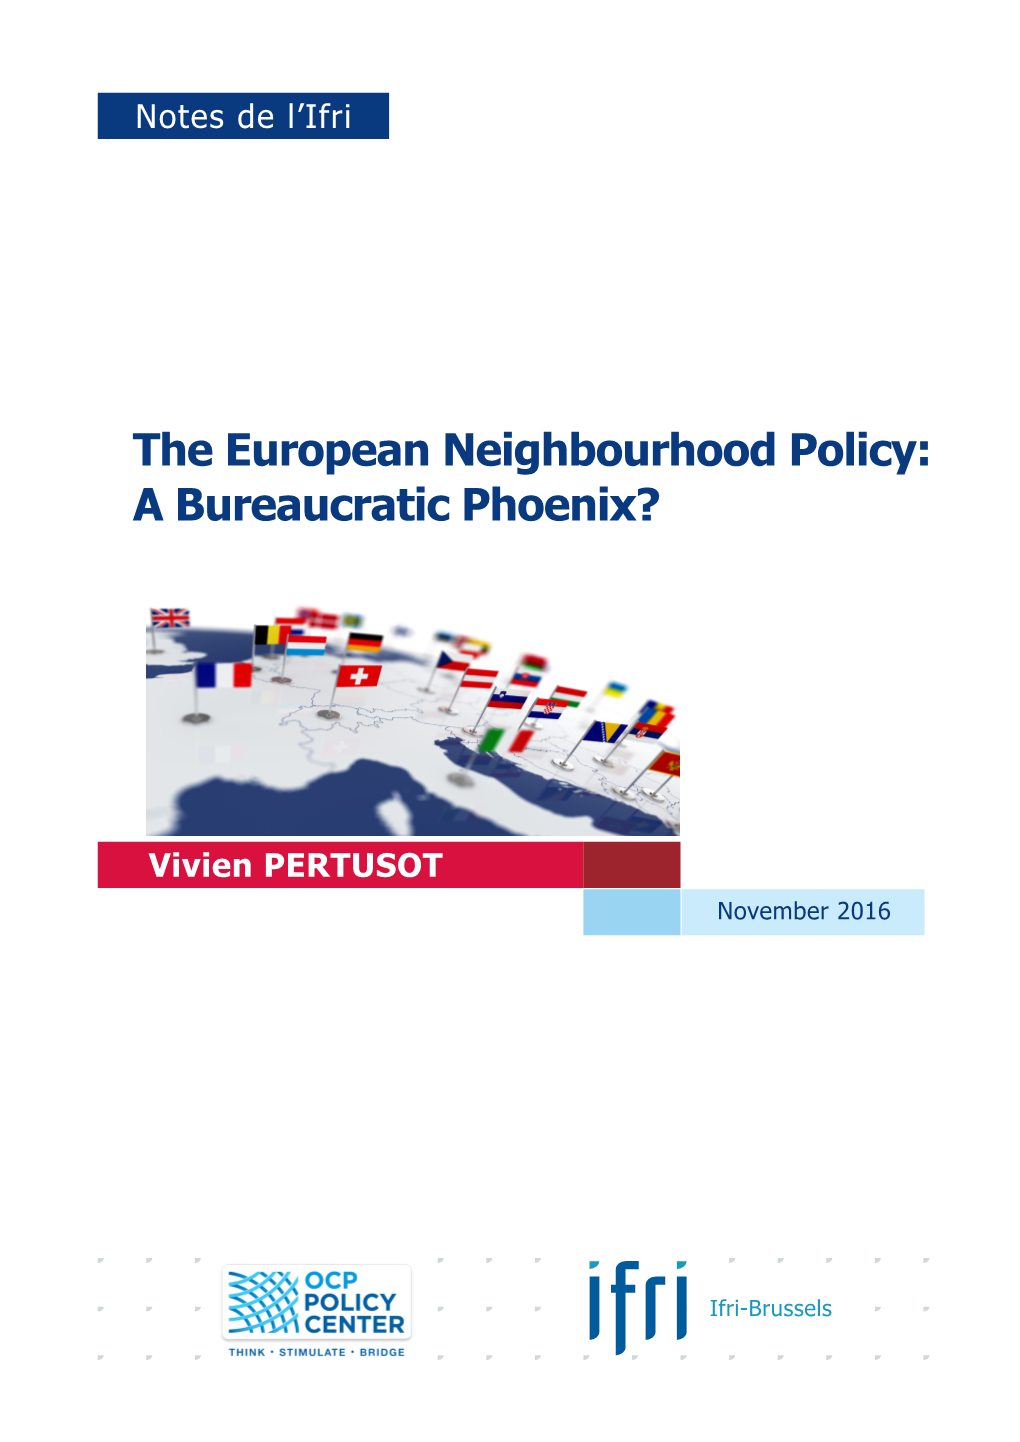 The European Neighbourhood Policy: a Bureaucratic Phoenix?